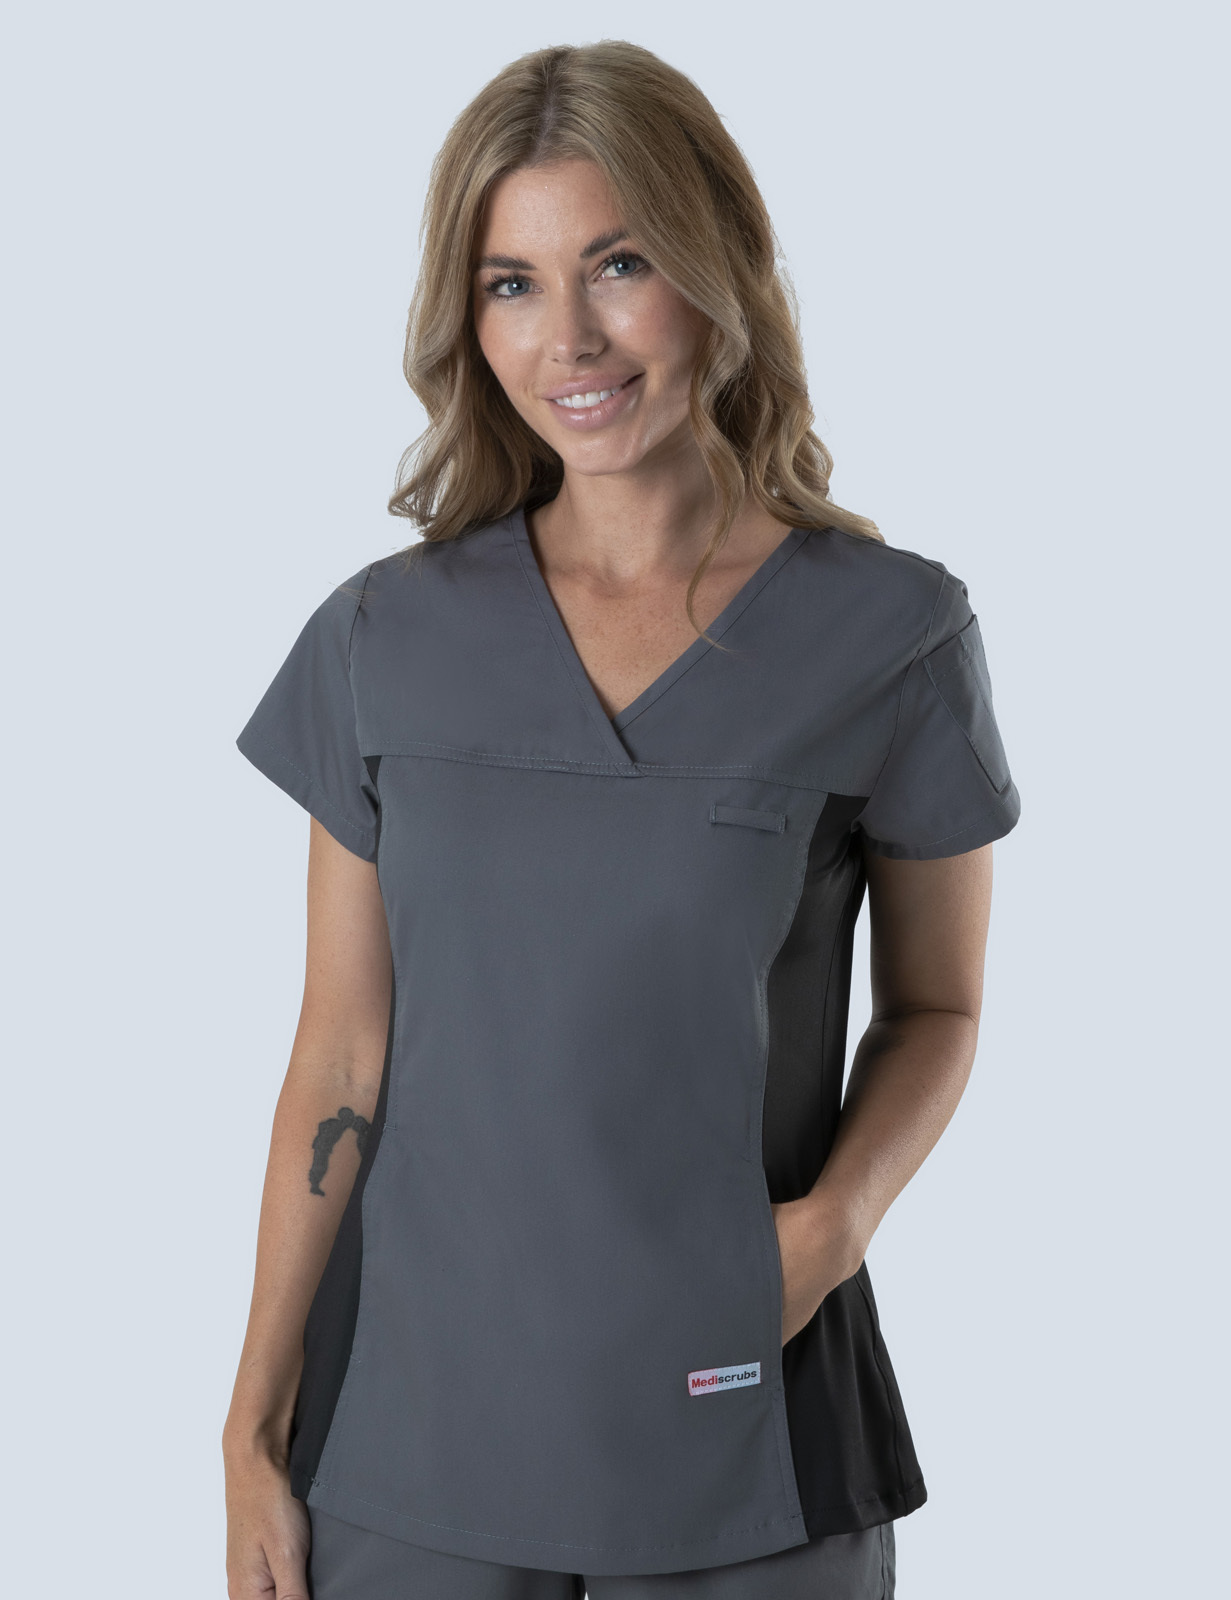 UQ Vets Gatton General Practitioner Uniform Top Only Bundle (Women's Fit Spandex Top in Steel Grey incl Logos)